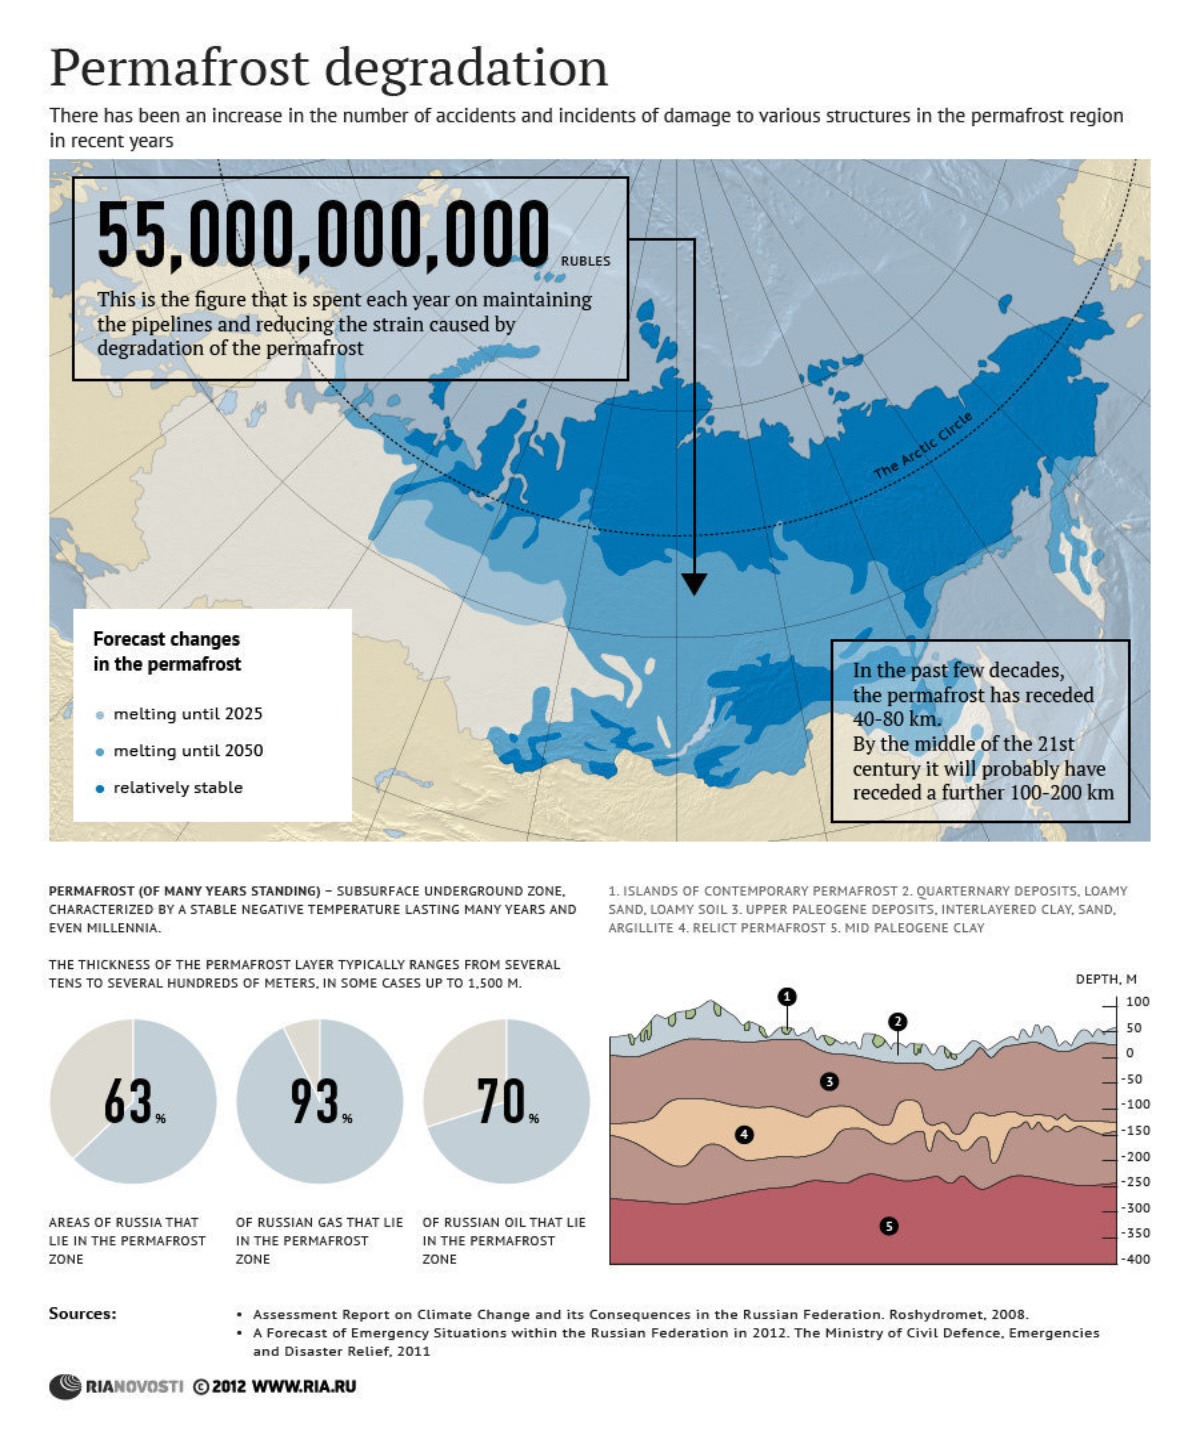 00-ria-novosti-infographics-permafrost-degradation-2012.jpg